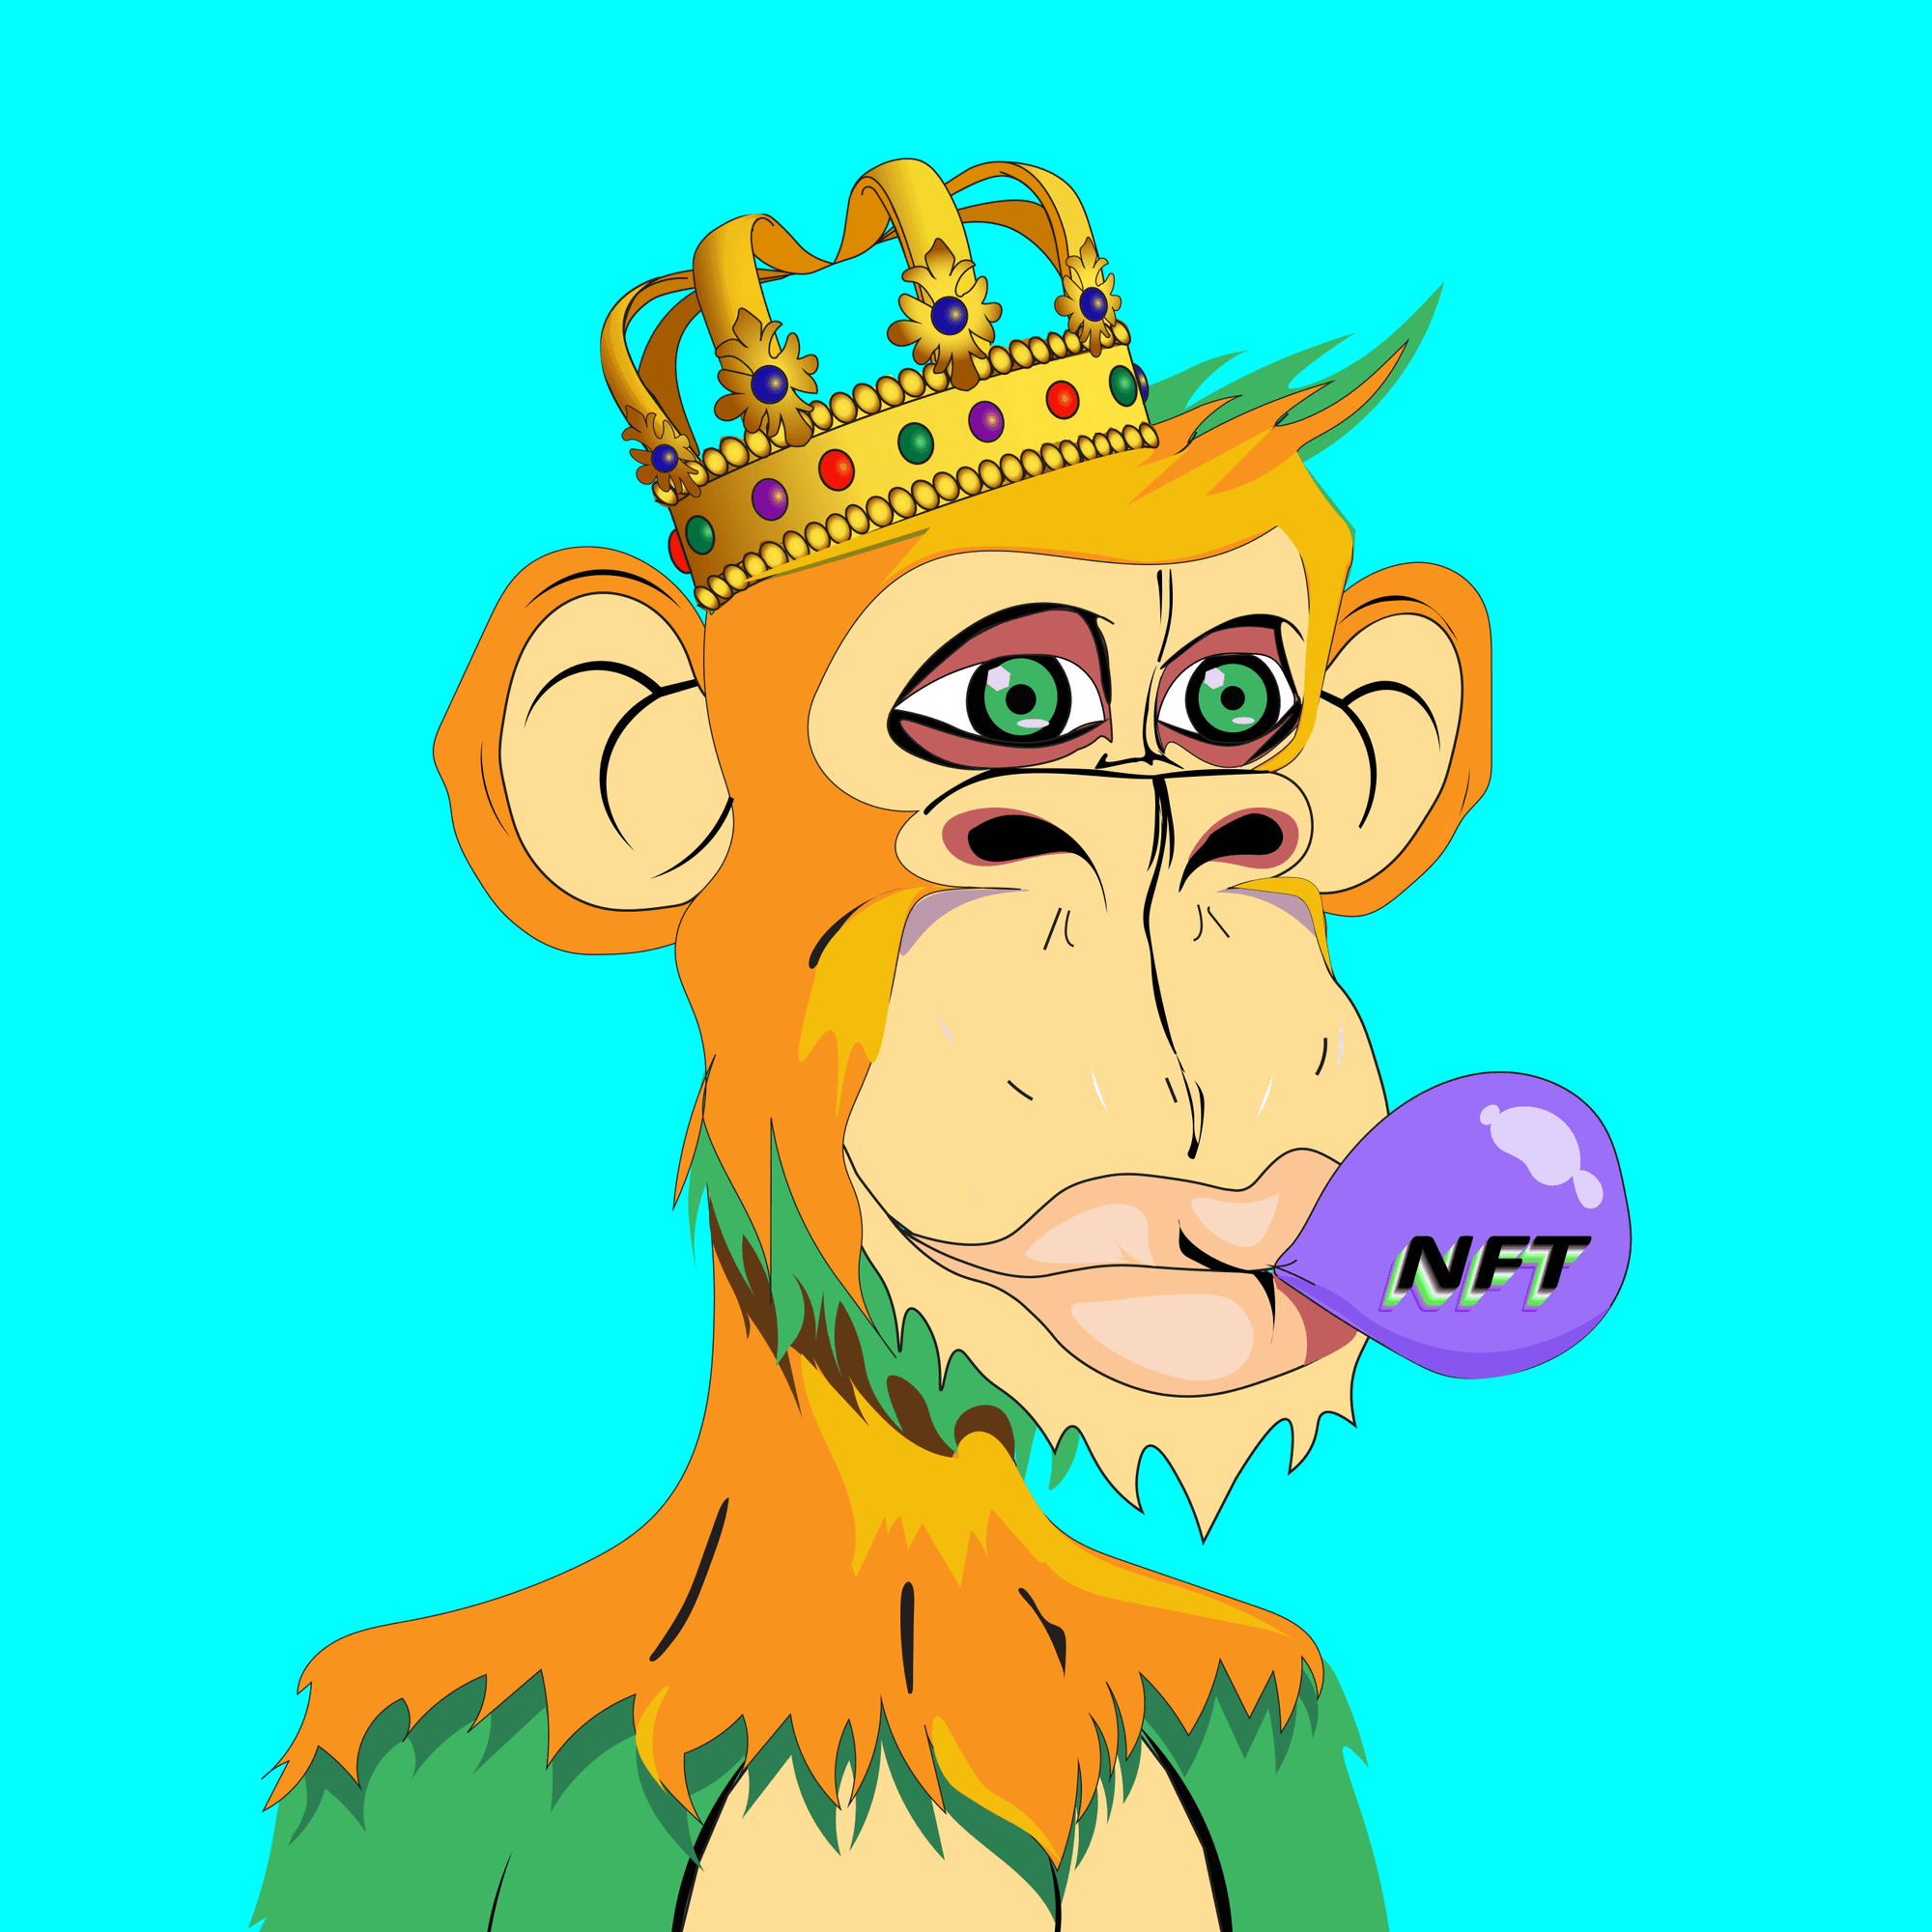 Monkey Kingdom NFT Avatar Generator